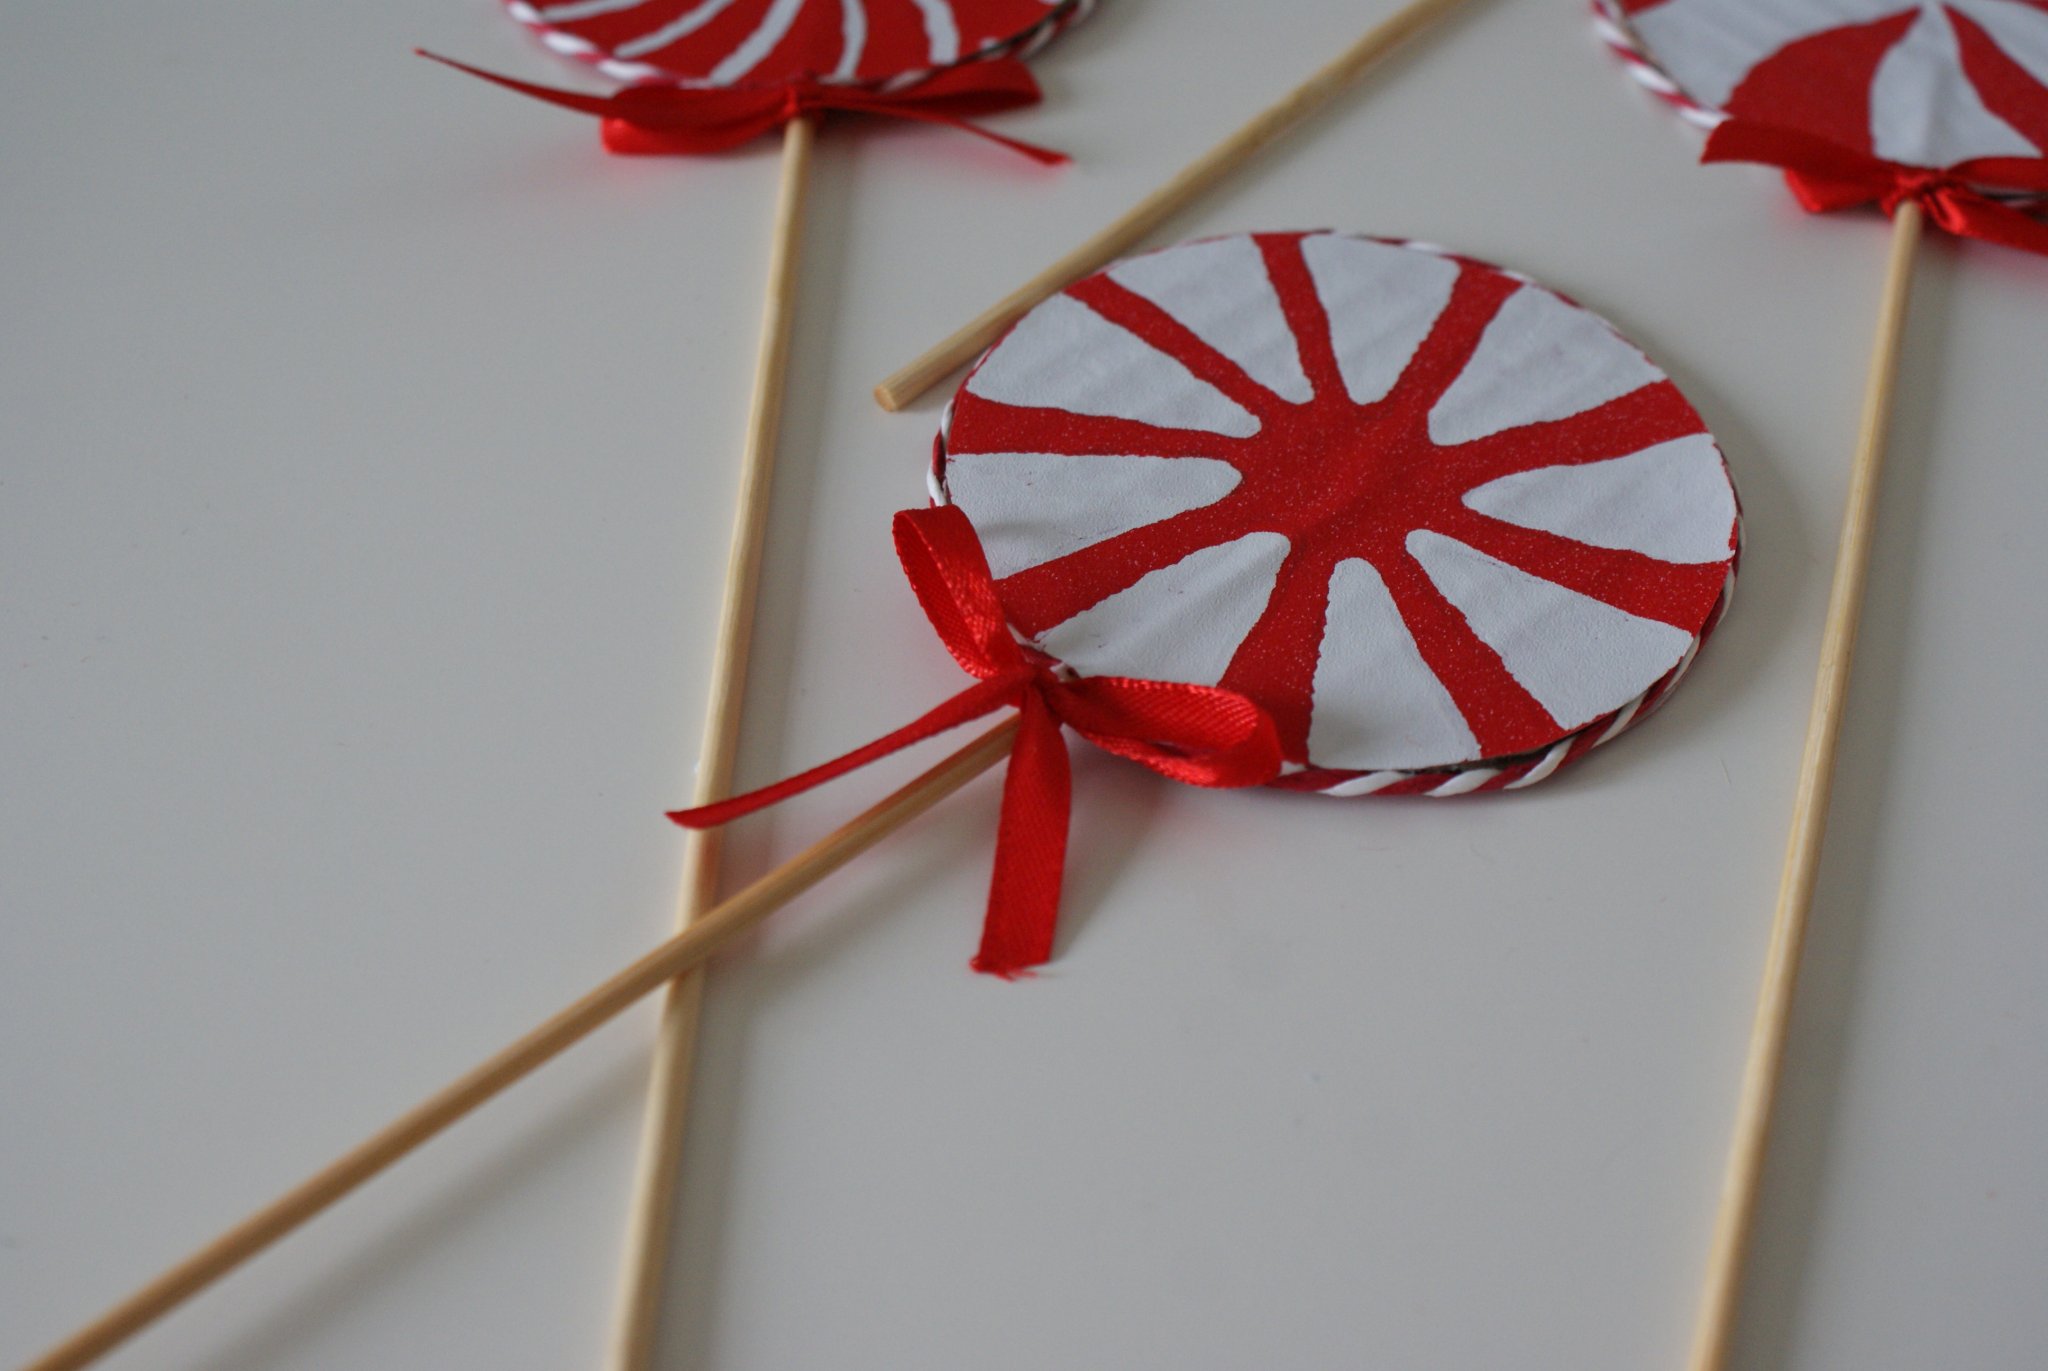 3pcs Flower Lollipop Decorative Cardboard Creative Small Red